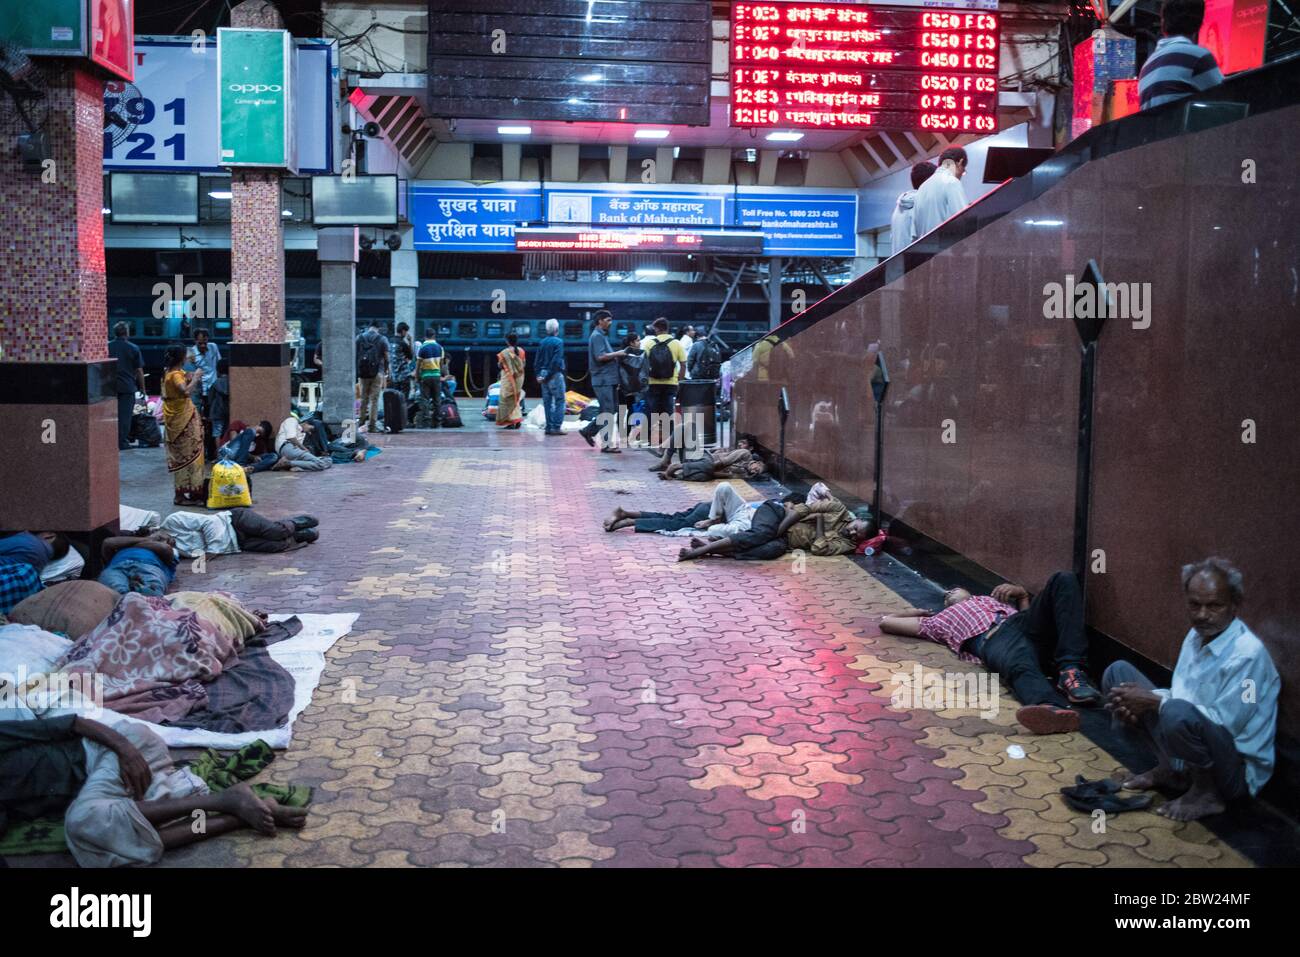 Passengers sleeping on floor of train station, Inda. Indian Railways. Rail Travel. Migrants. Stock Photo